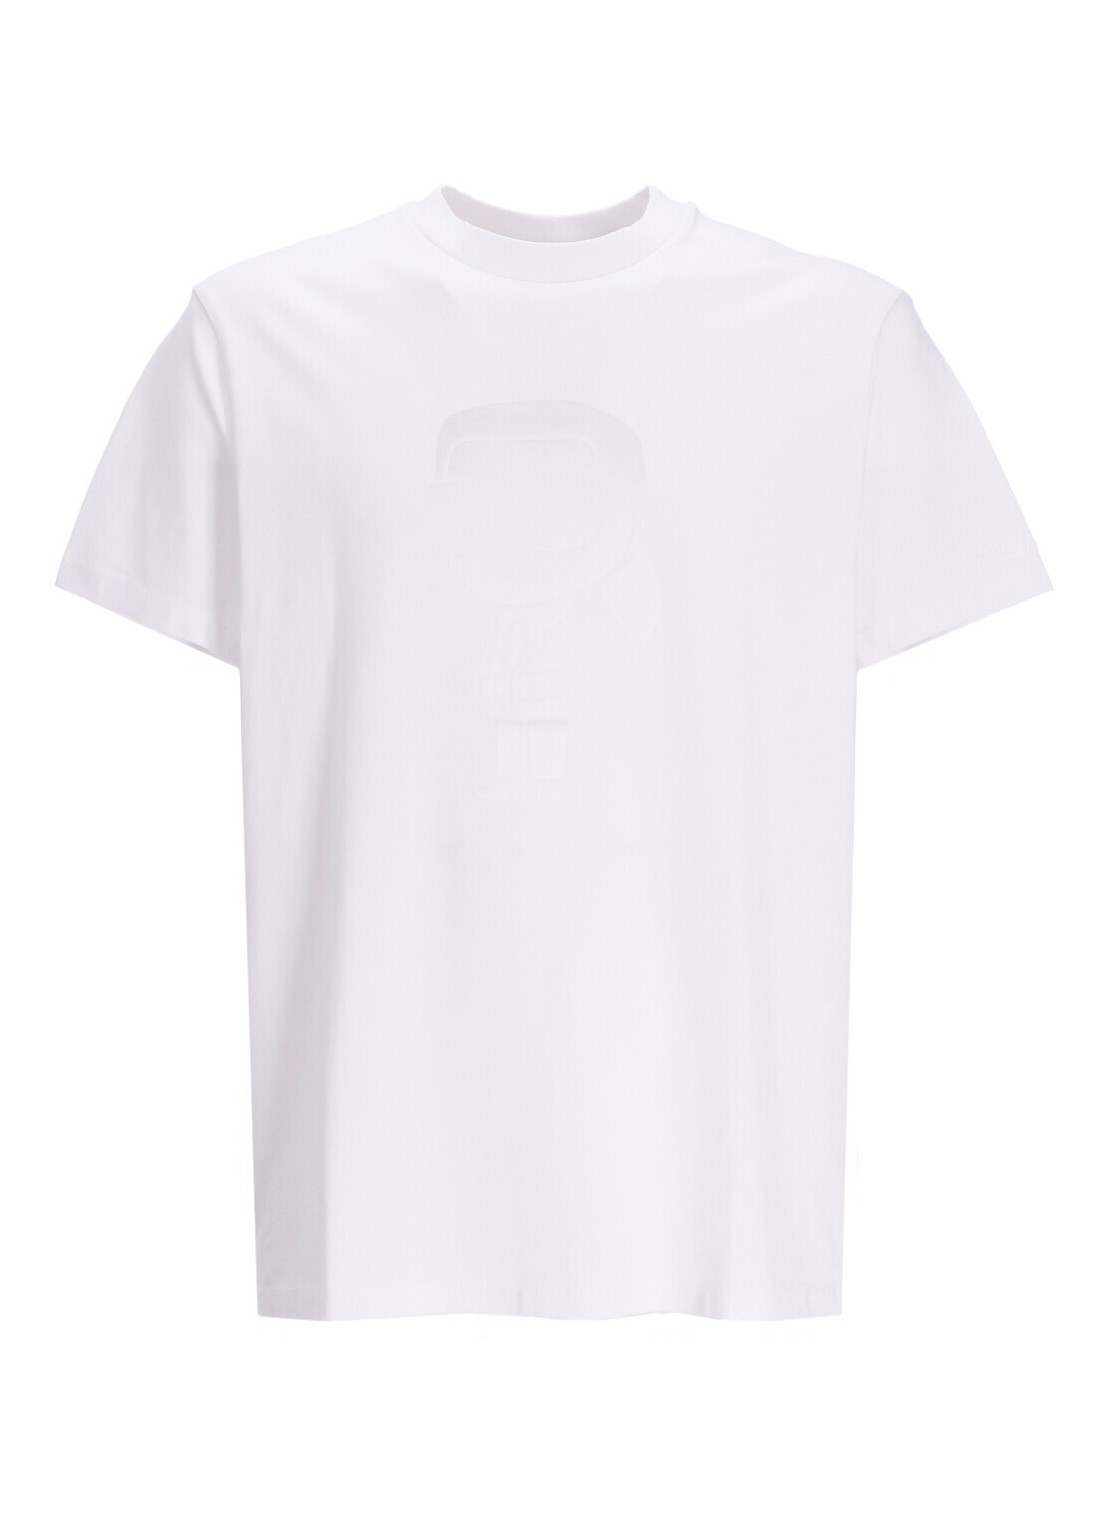 Camiseta karl lagerfeld t-shirt man t-shirt crewneck 755400541221 10 talla M
 